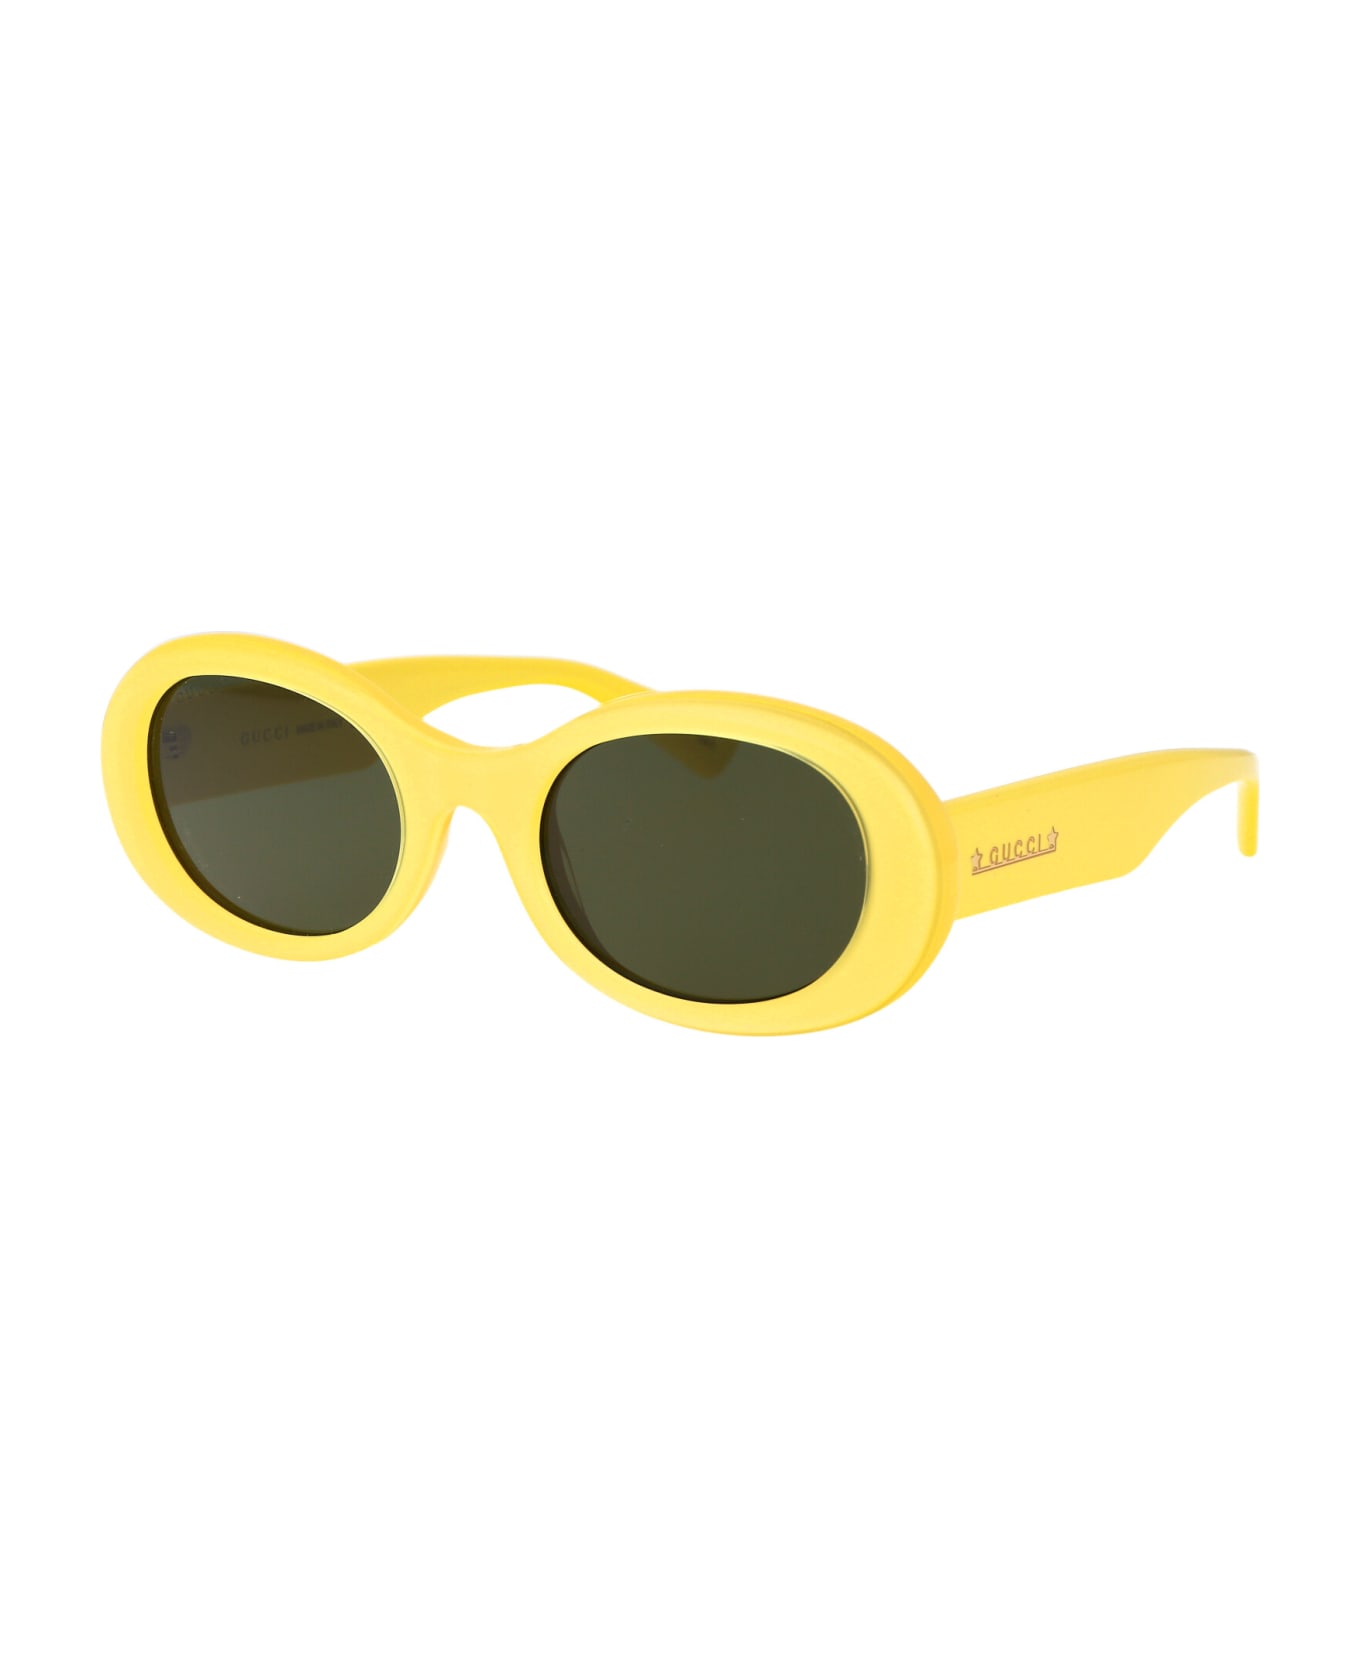 Gucci Eyewear Gg1587s Sunglasses - 004 YELLOW YELLOW GREEN